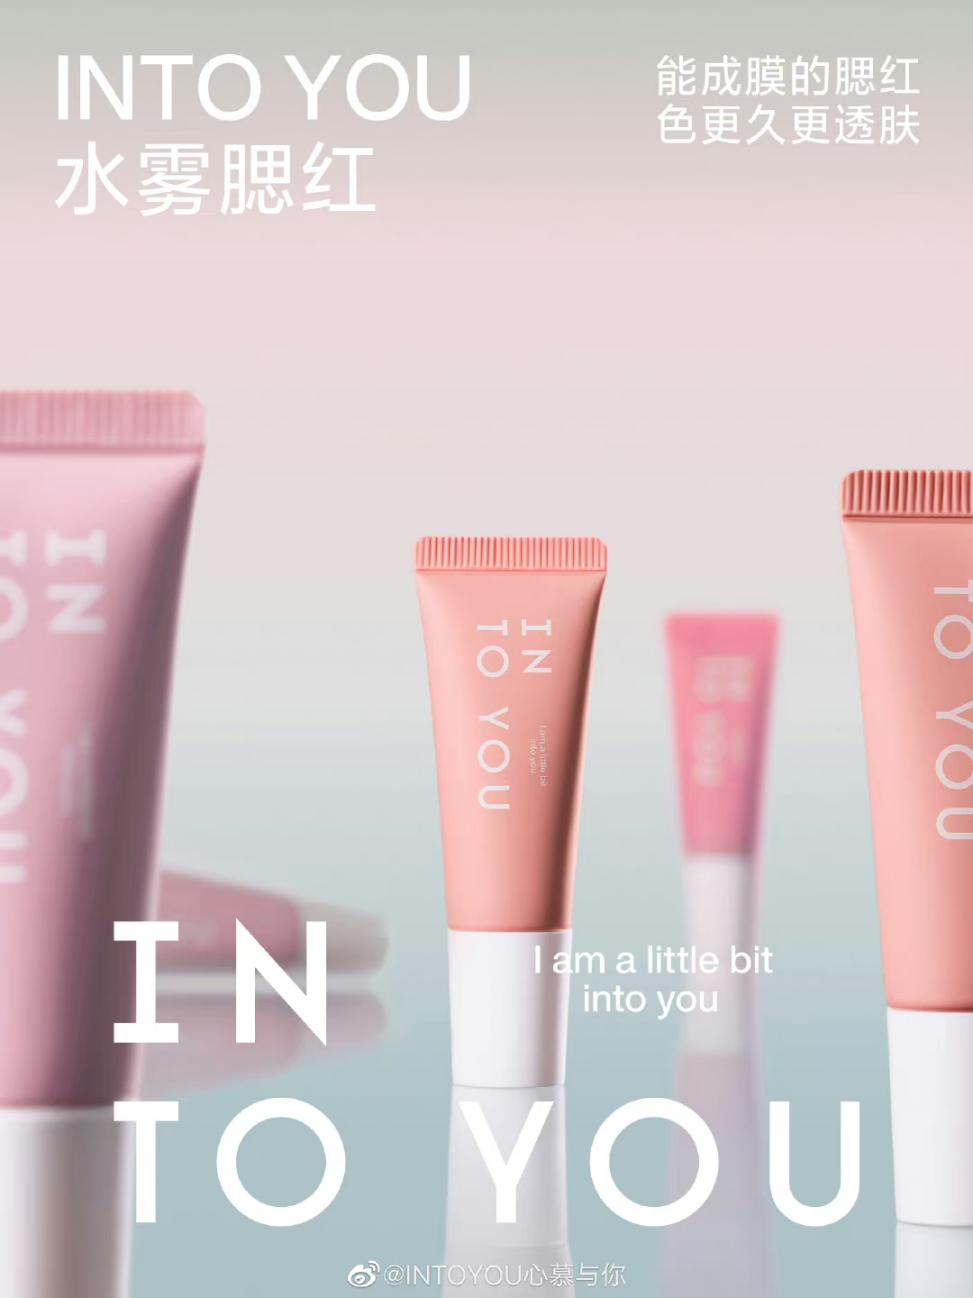 INTO YOU化妆品再上新，为消费者打造全新彩妆体验